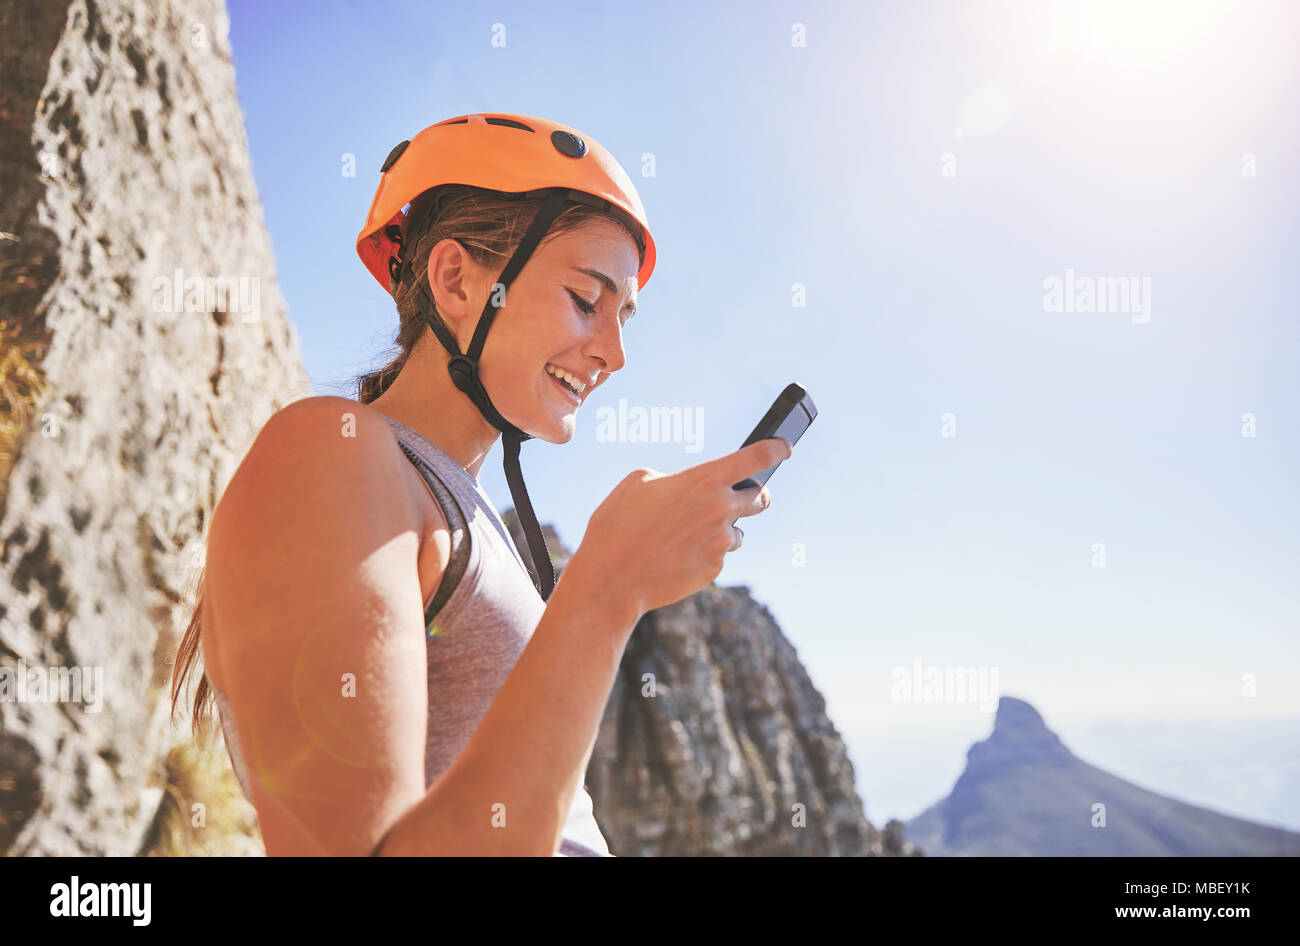 Smiling female rock climber avec smart phone Banque D'Images